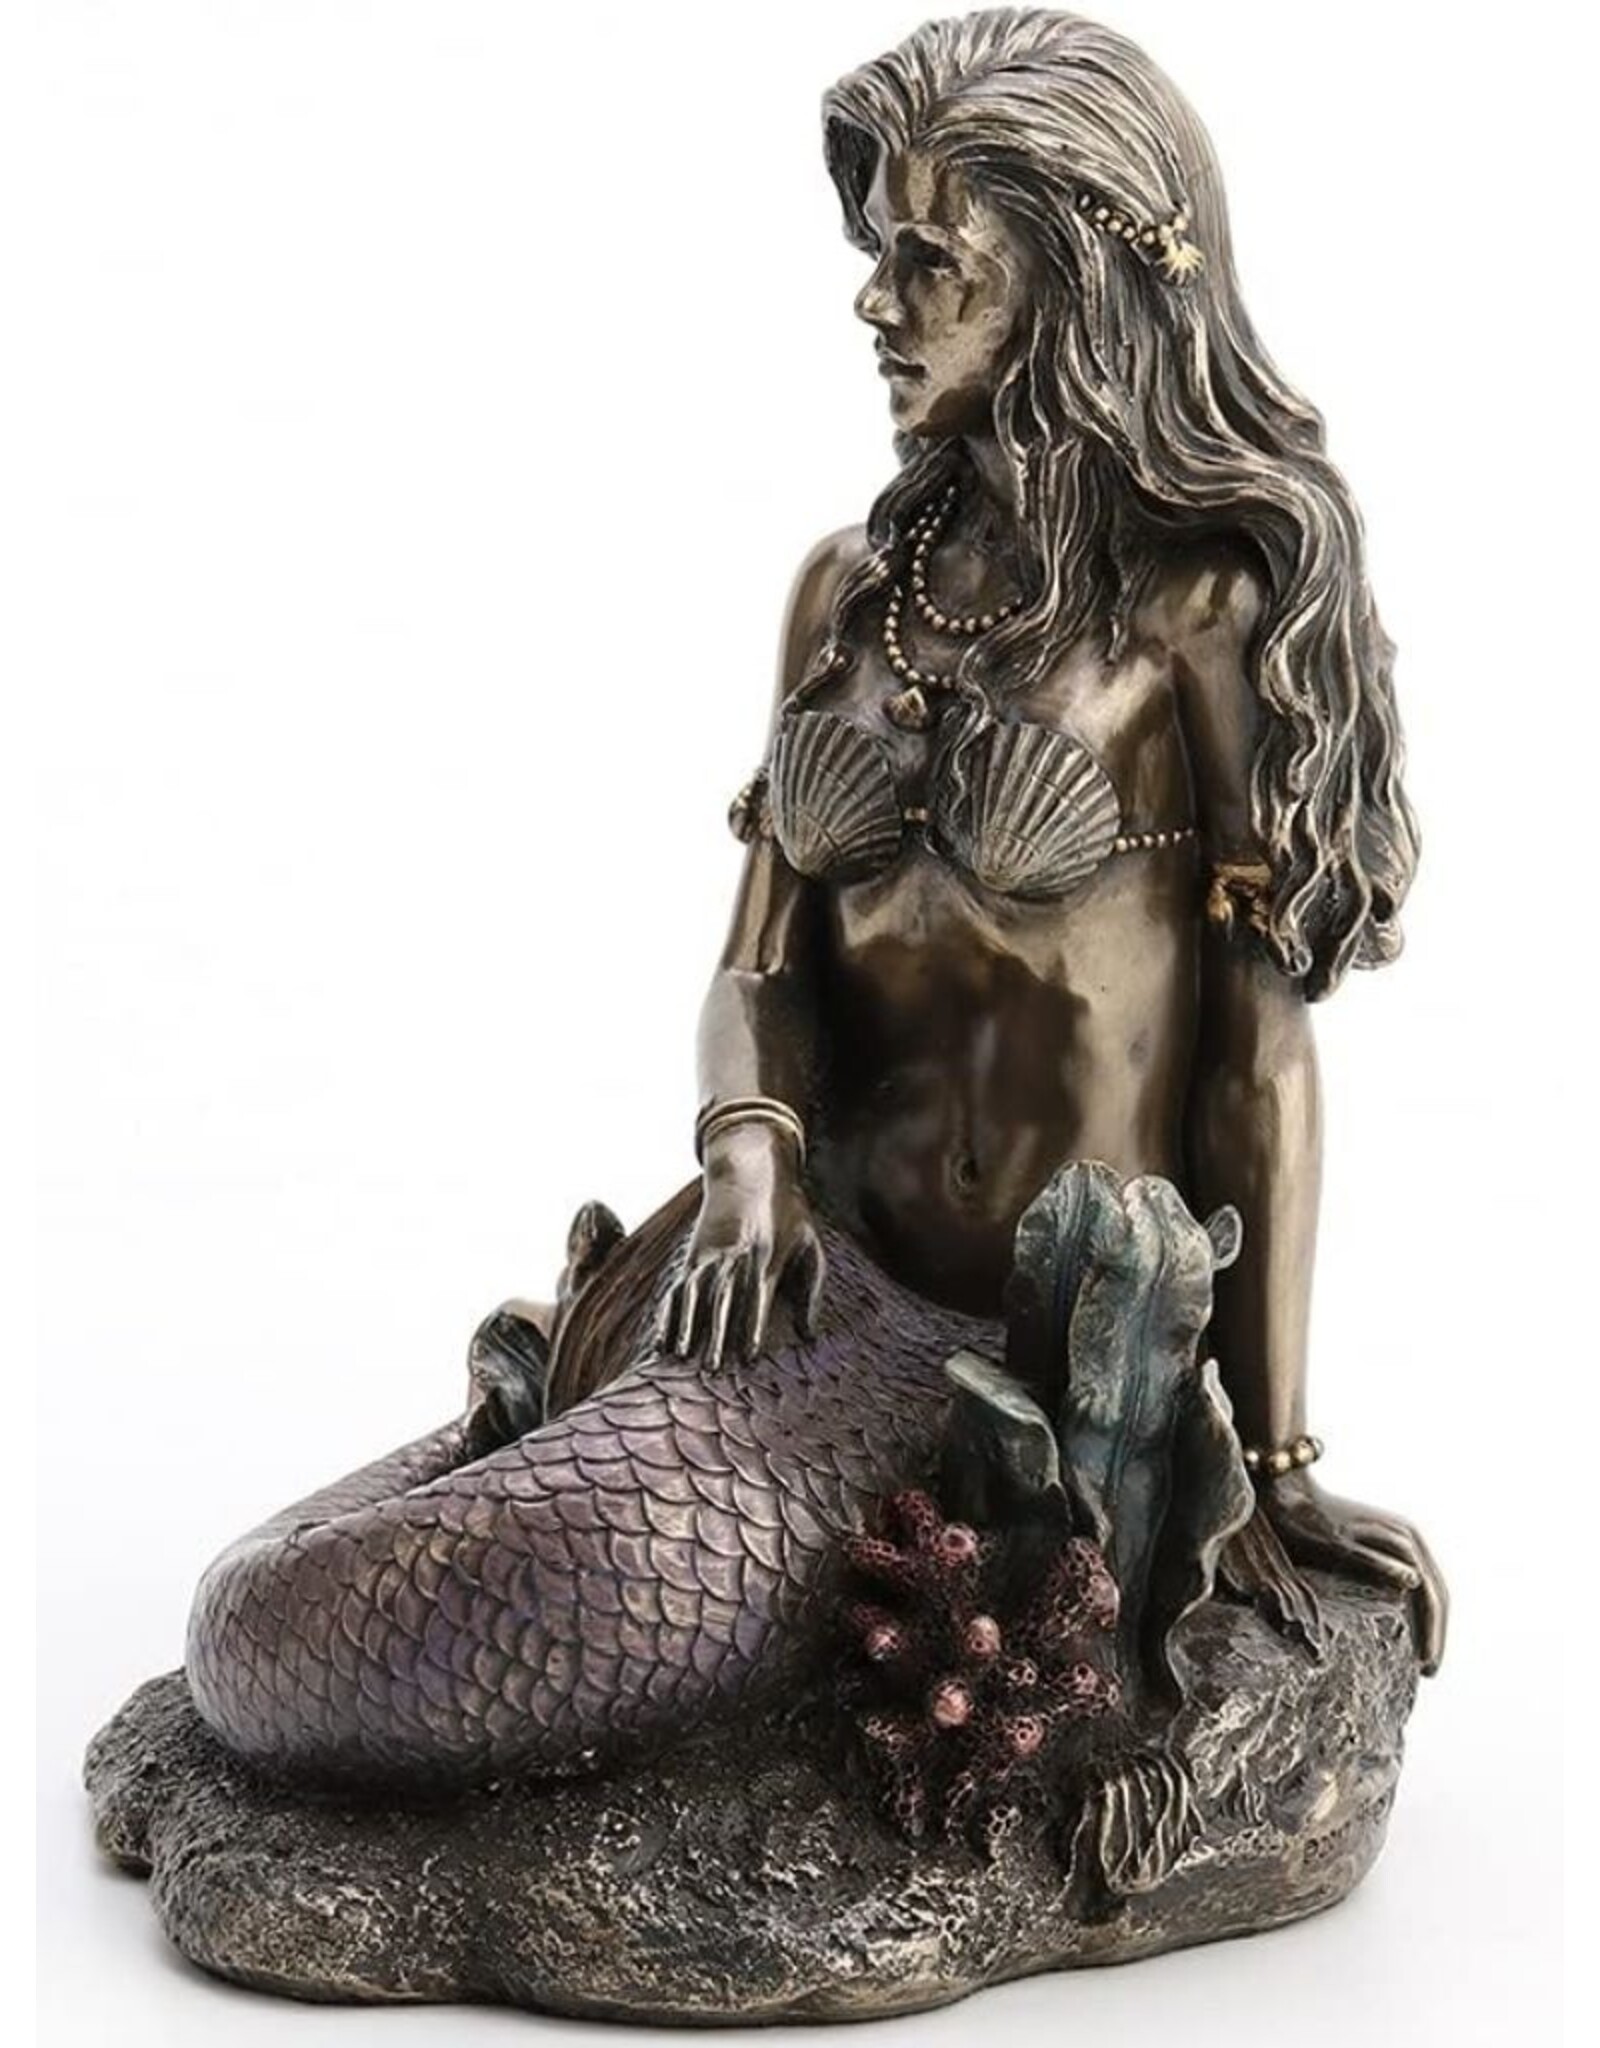 Veronese Design Veronese Design - Enchanted Song Mermaid Sitting Veronese Design